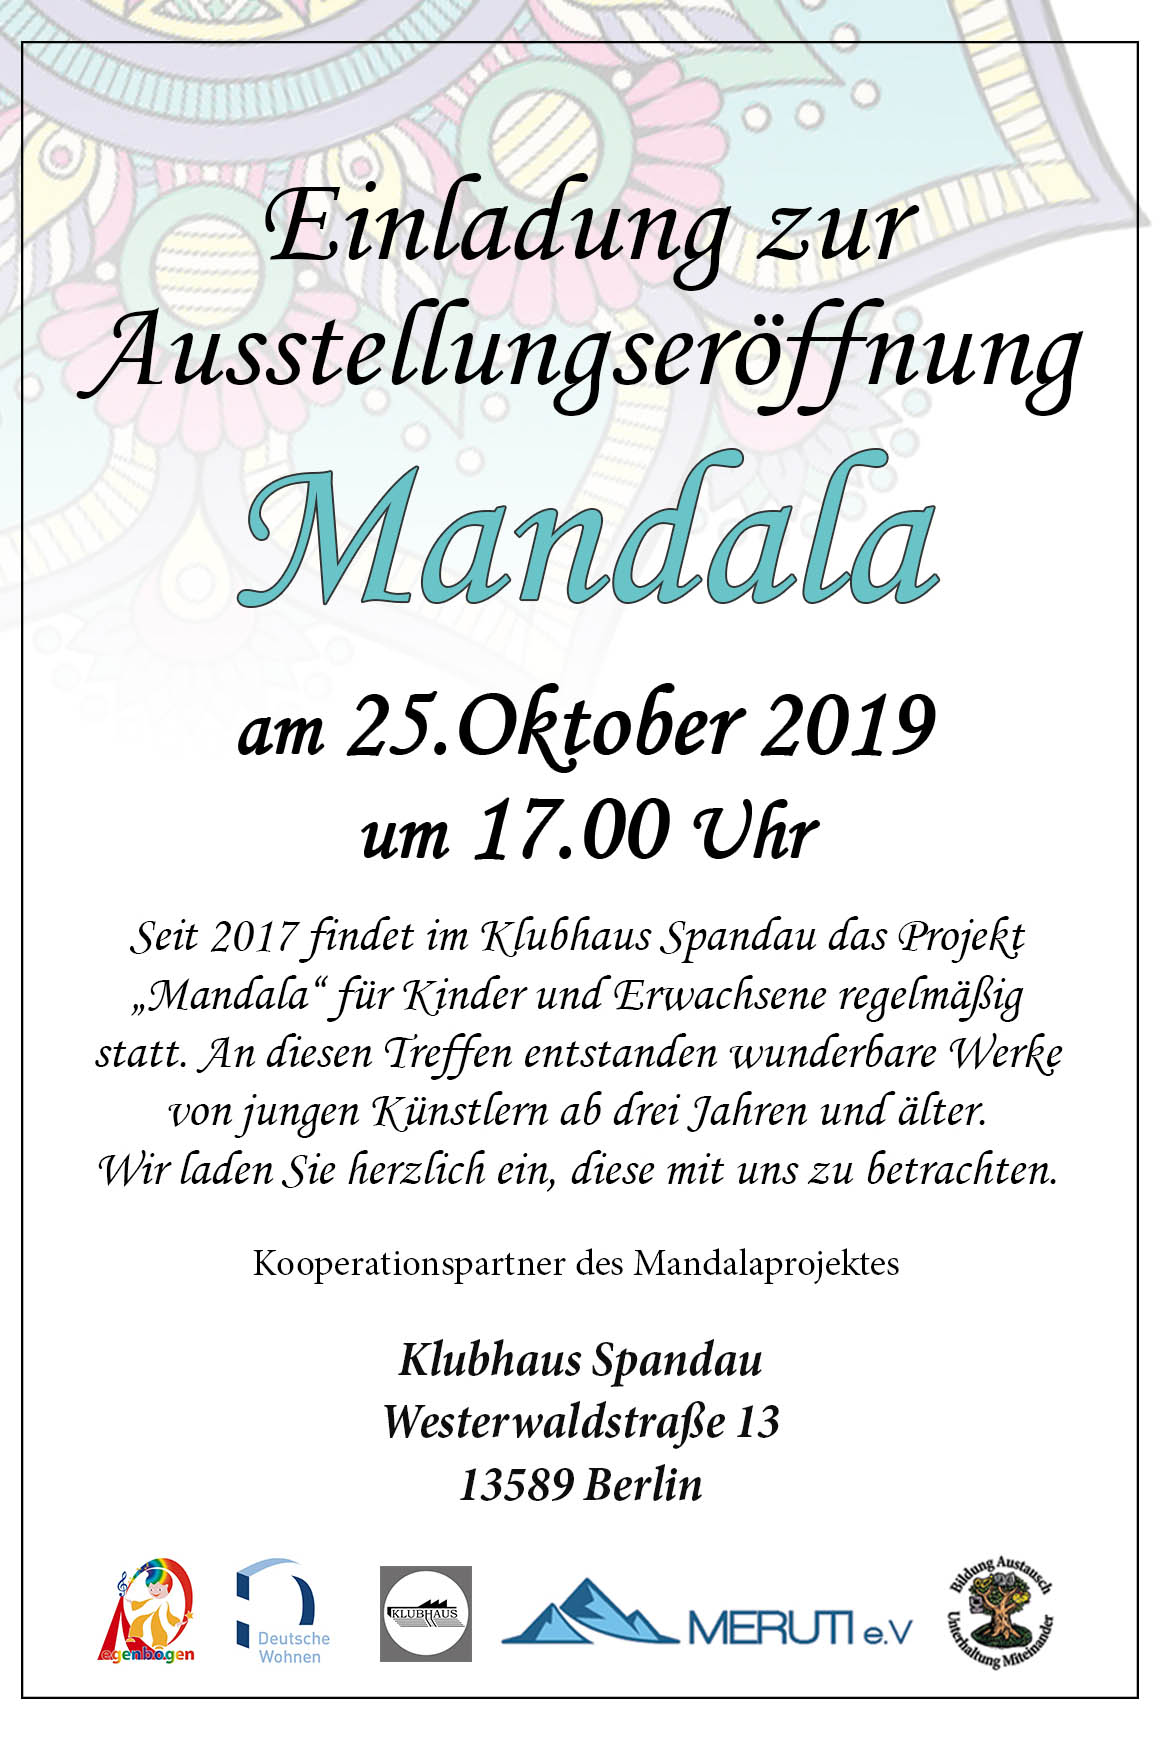 Mandala – Ausstellung im Klubhaus Spandau